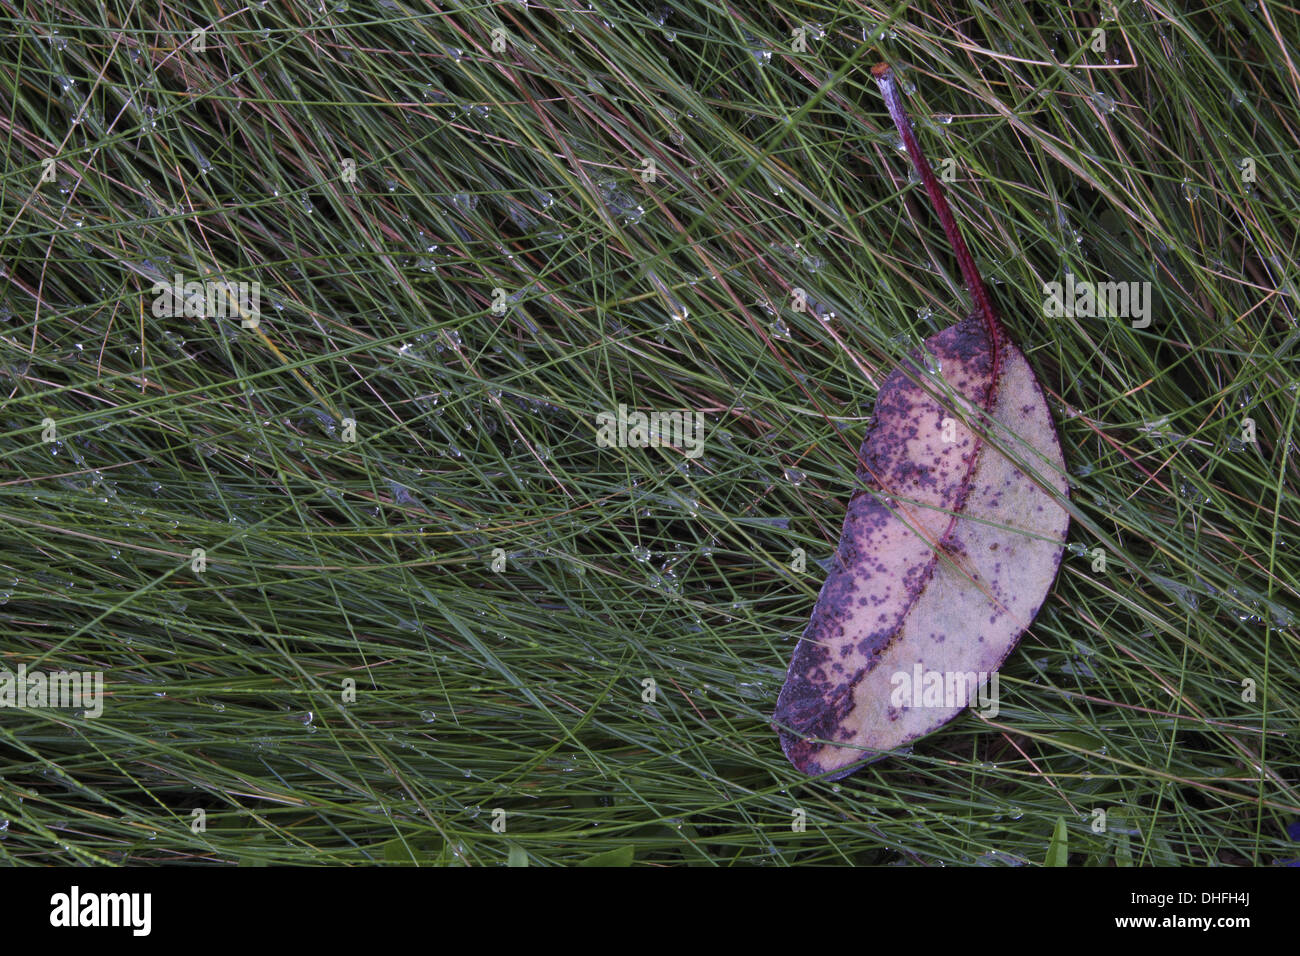 spent Eucalyptus leaf fallen on native poa grass Stock Photo